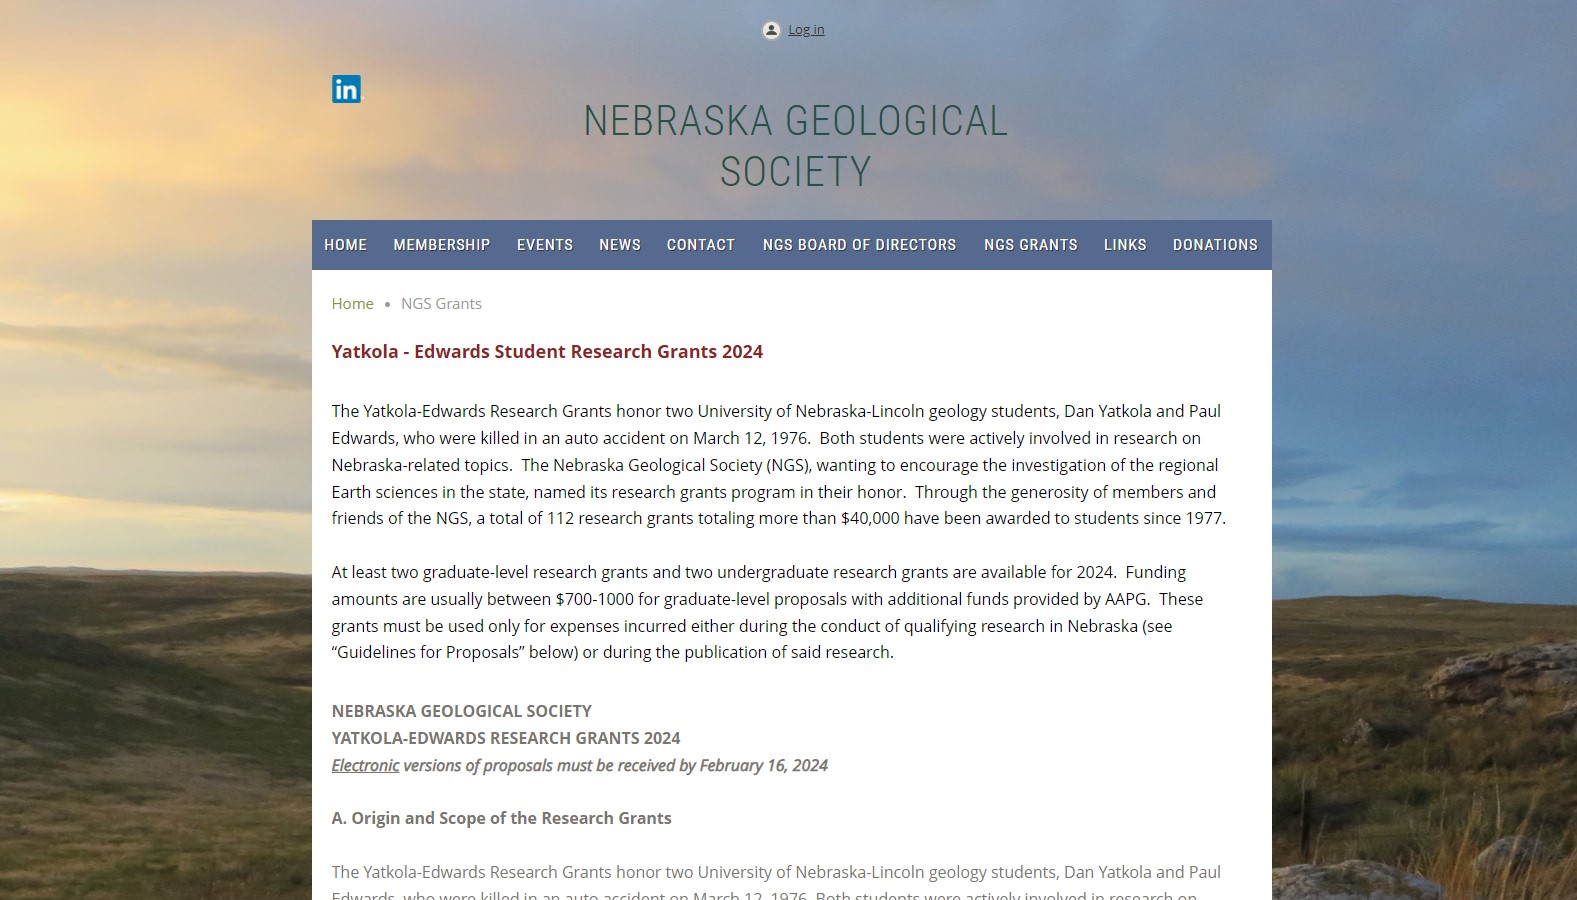 2024 Nebraska Geological Society YatkolaEdwards Research Grants